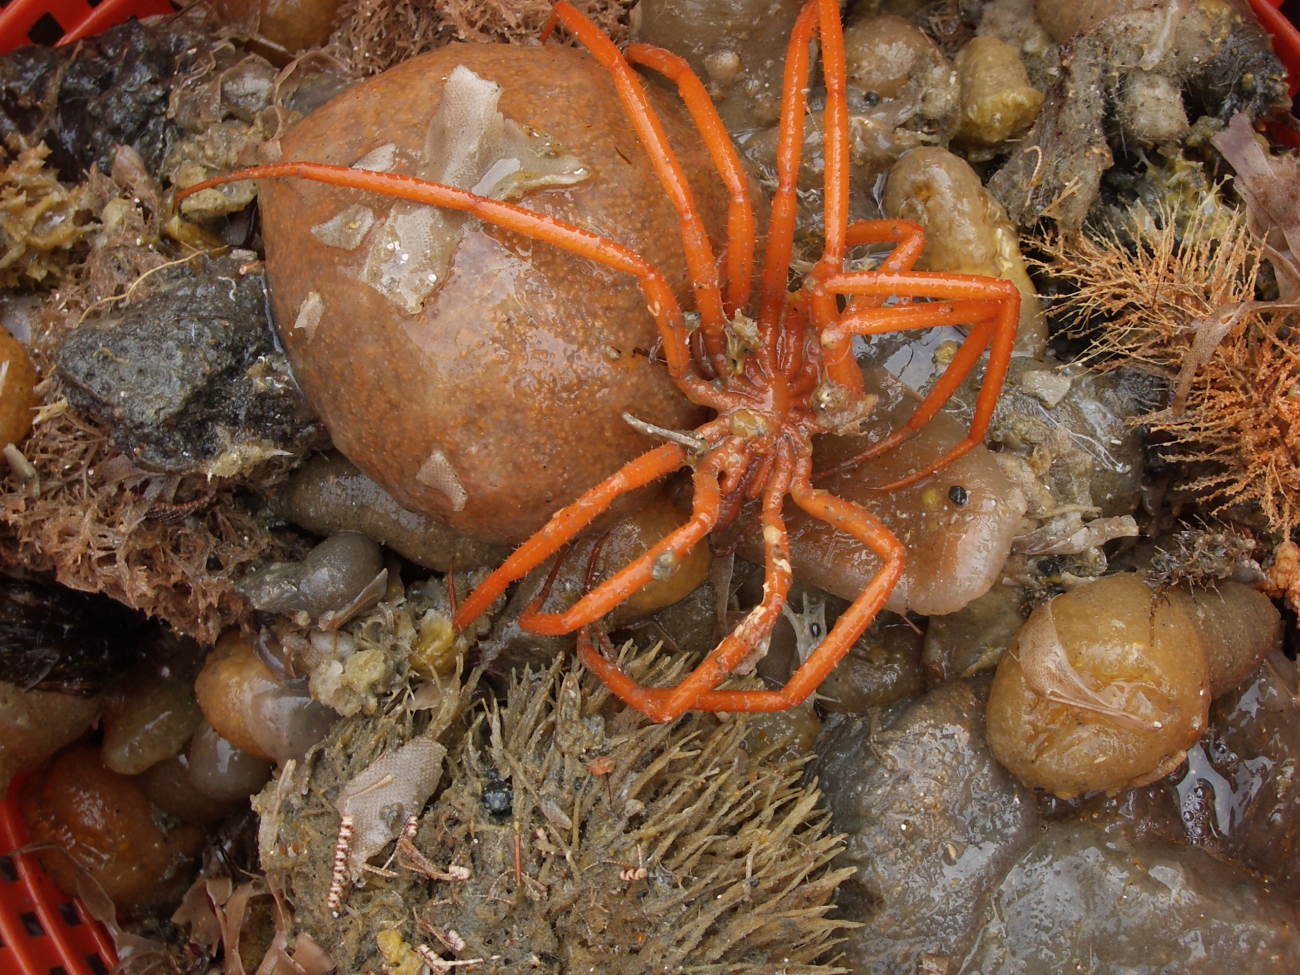 Benthic invertebrate catch, with a crab